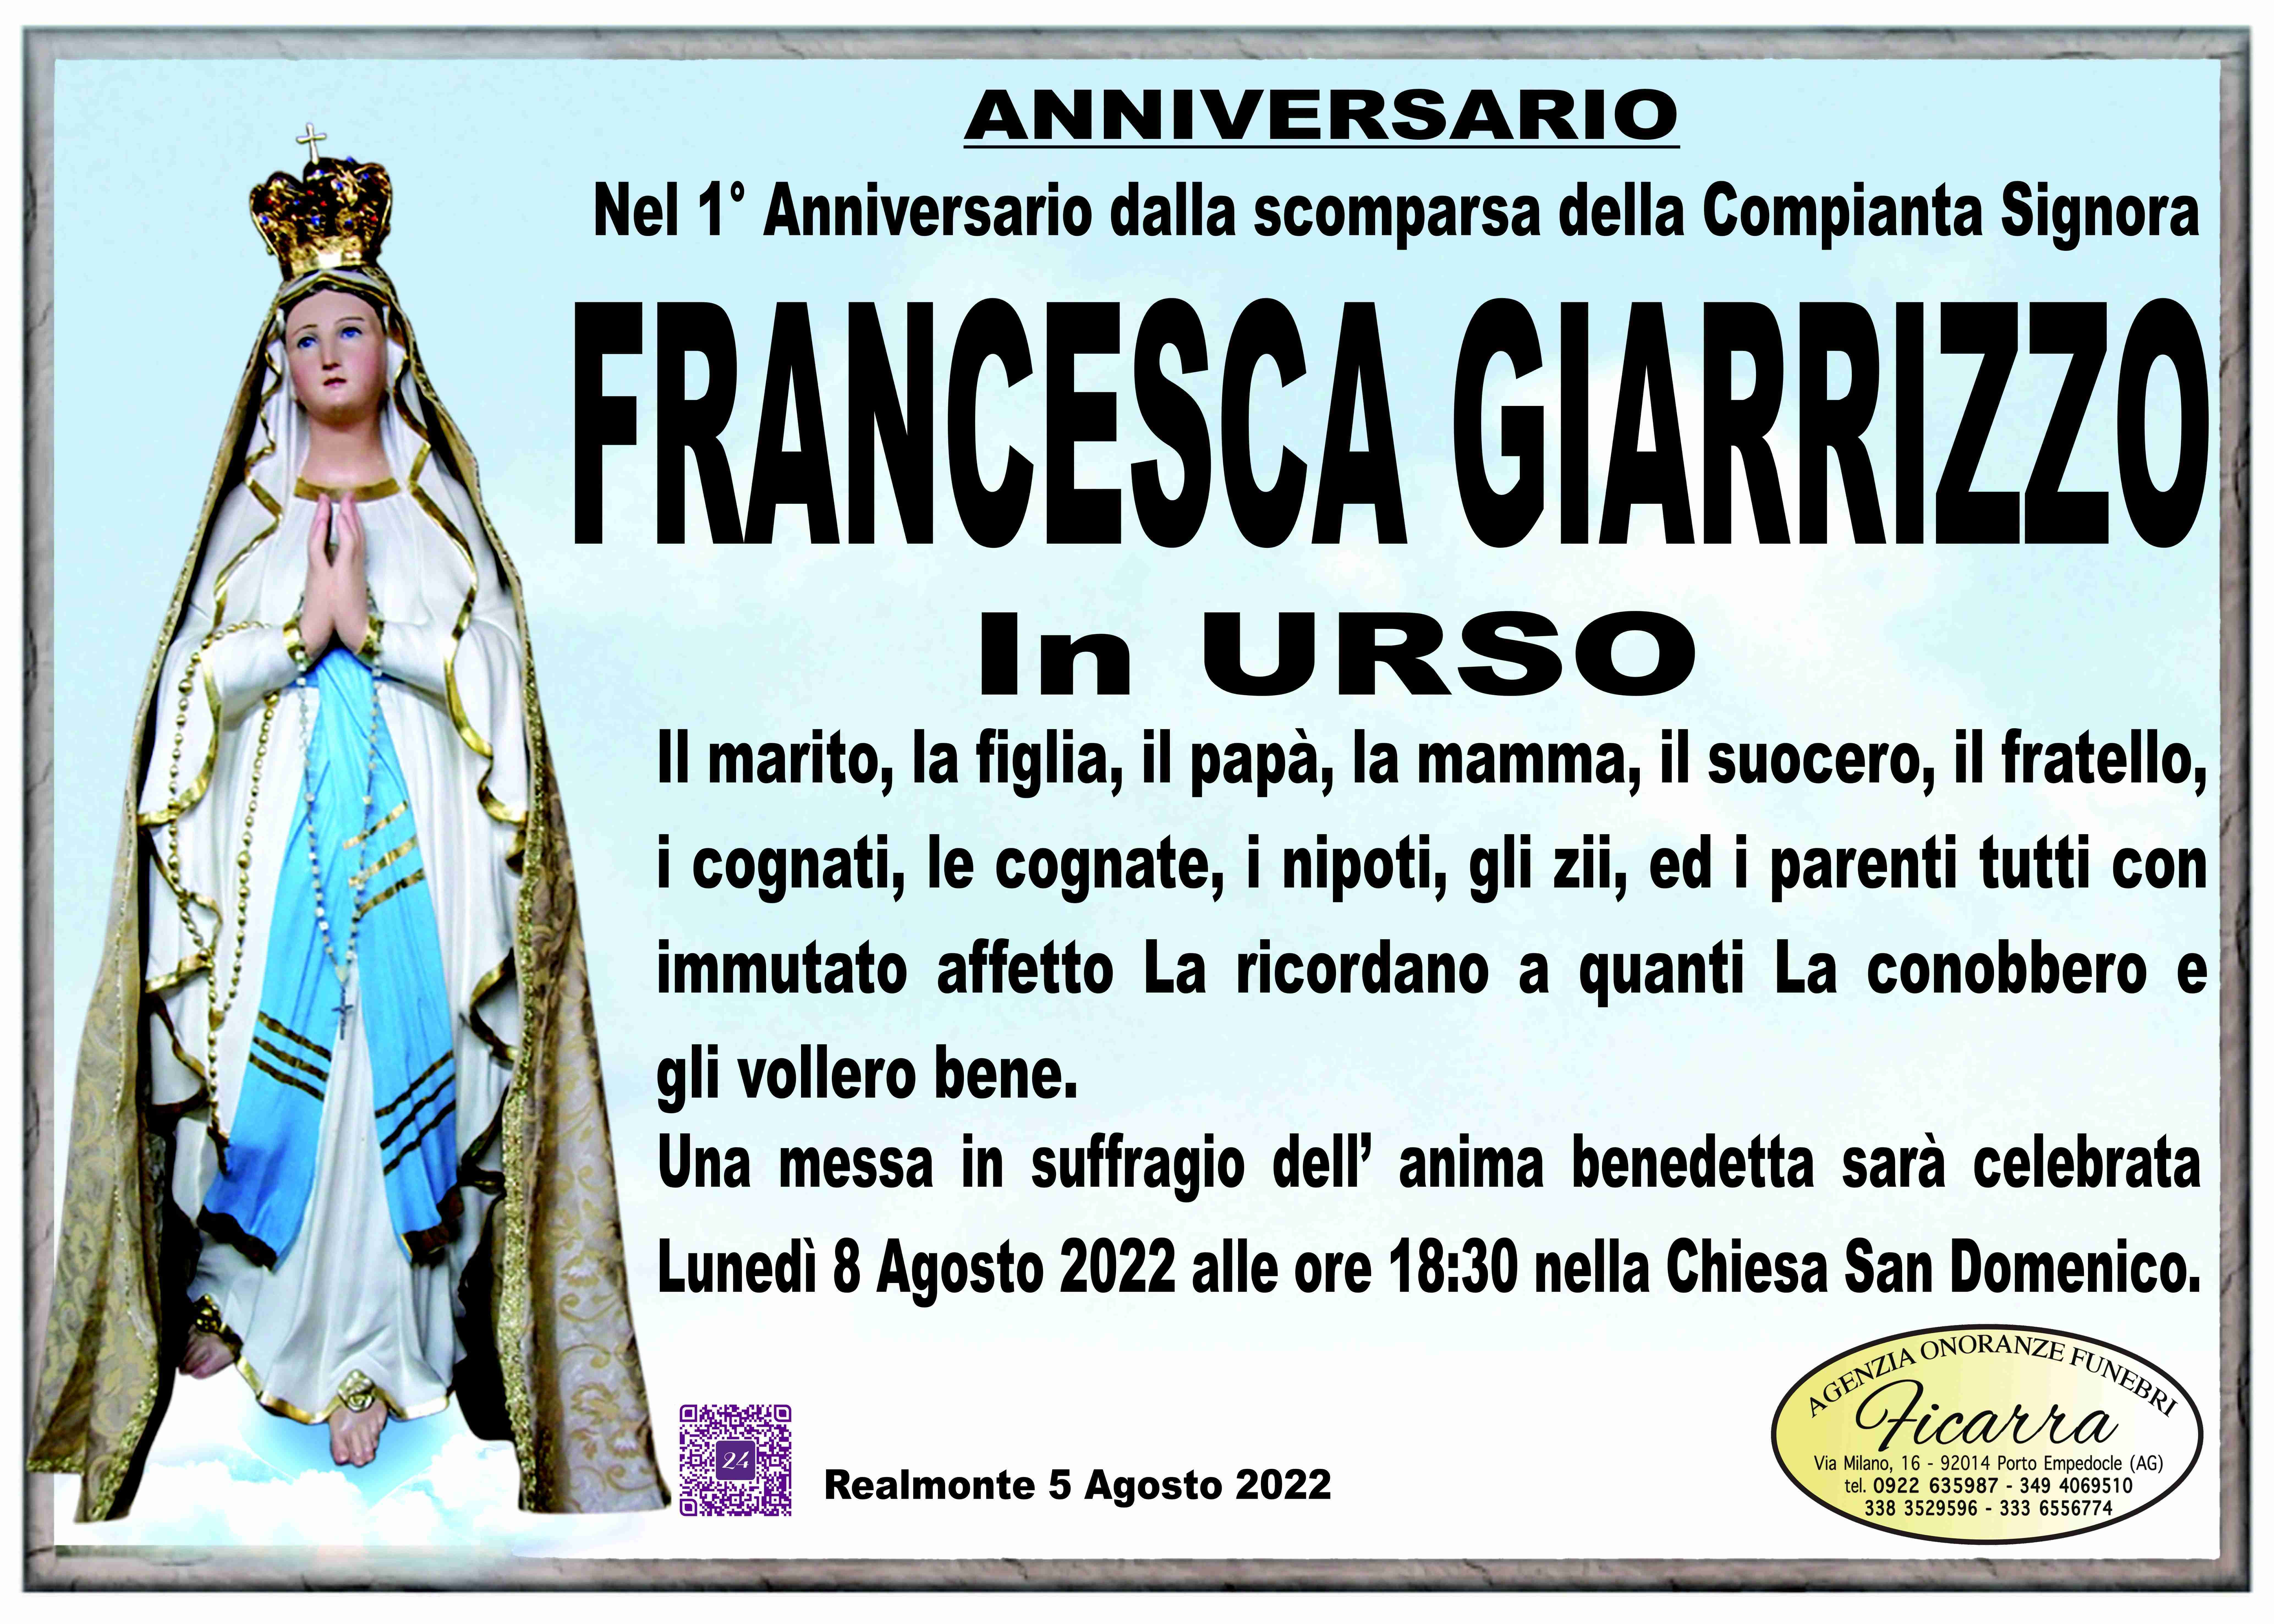 Francesca Giarrizzo